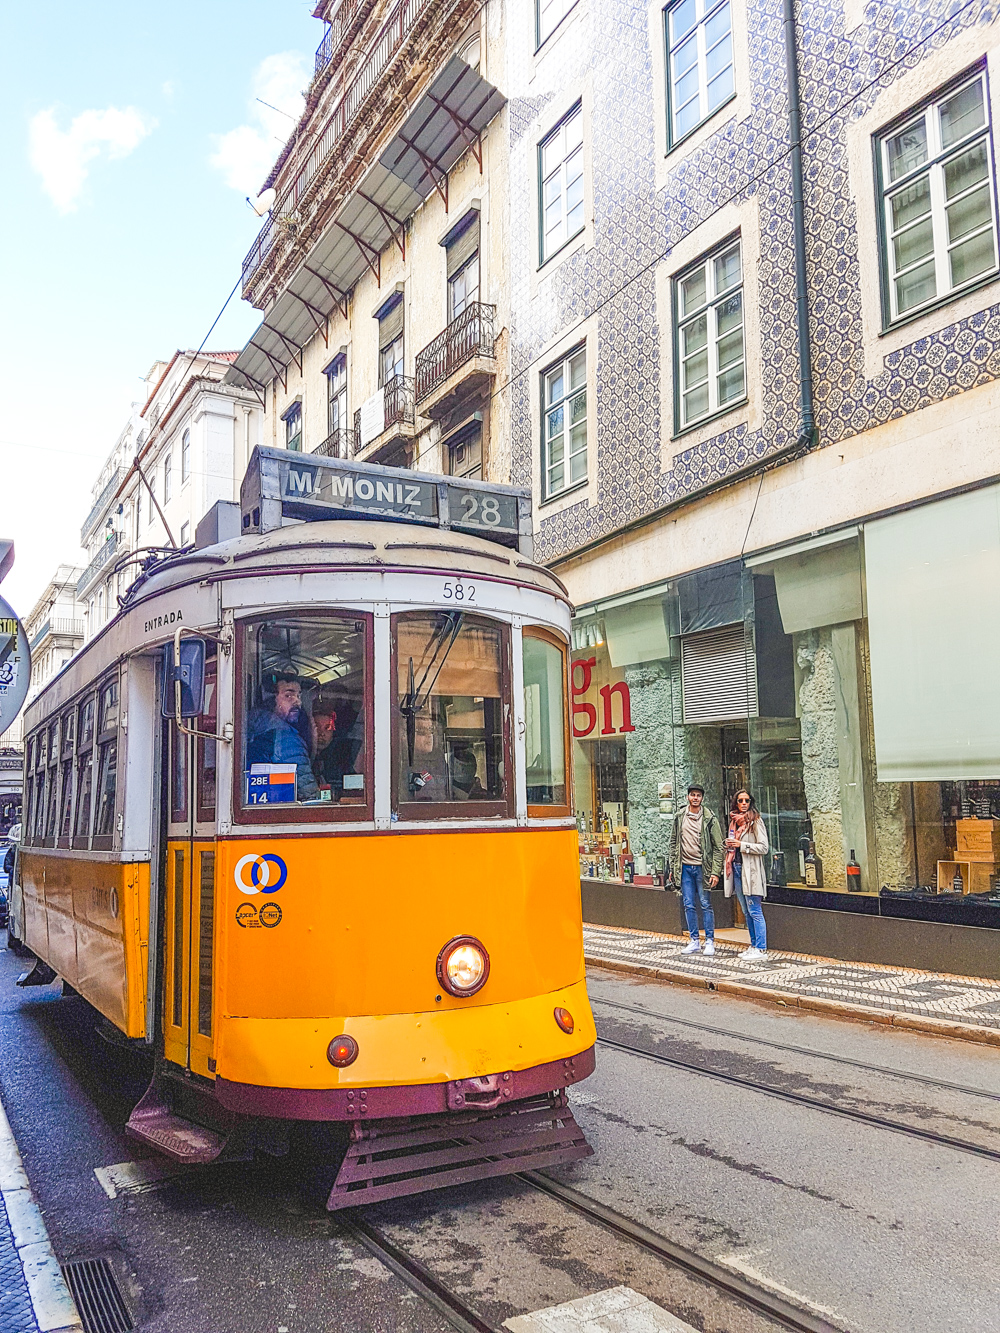 Tram 28 in Alfama, Lisbon, Portugal